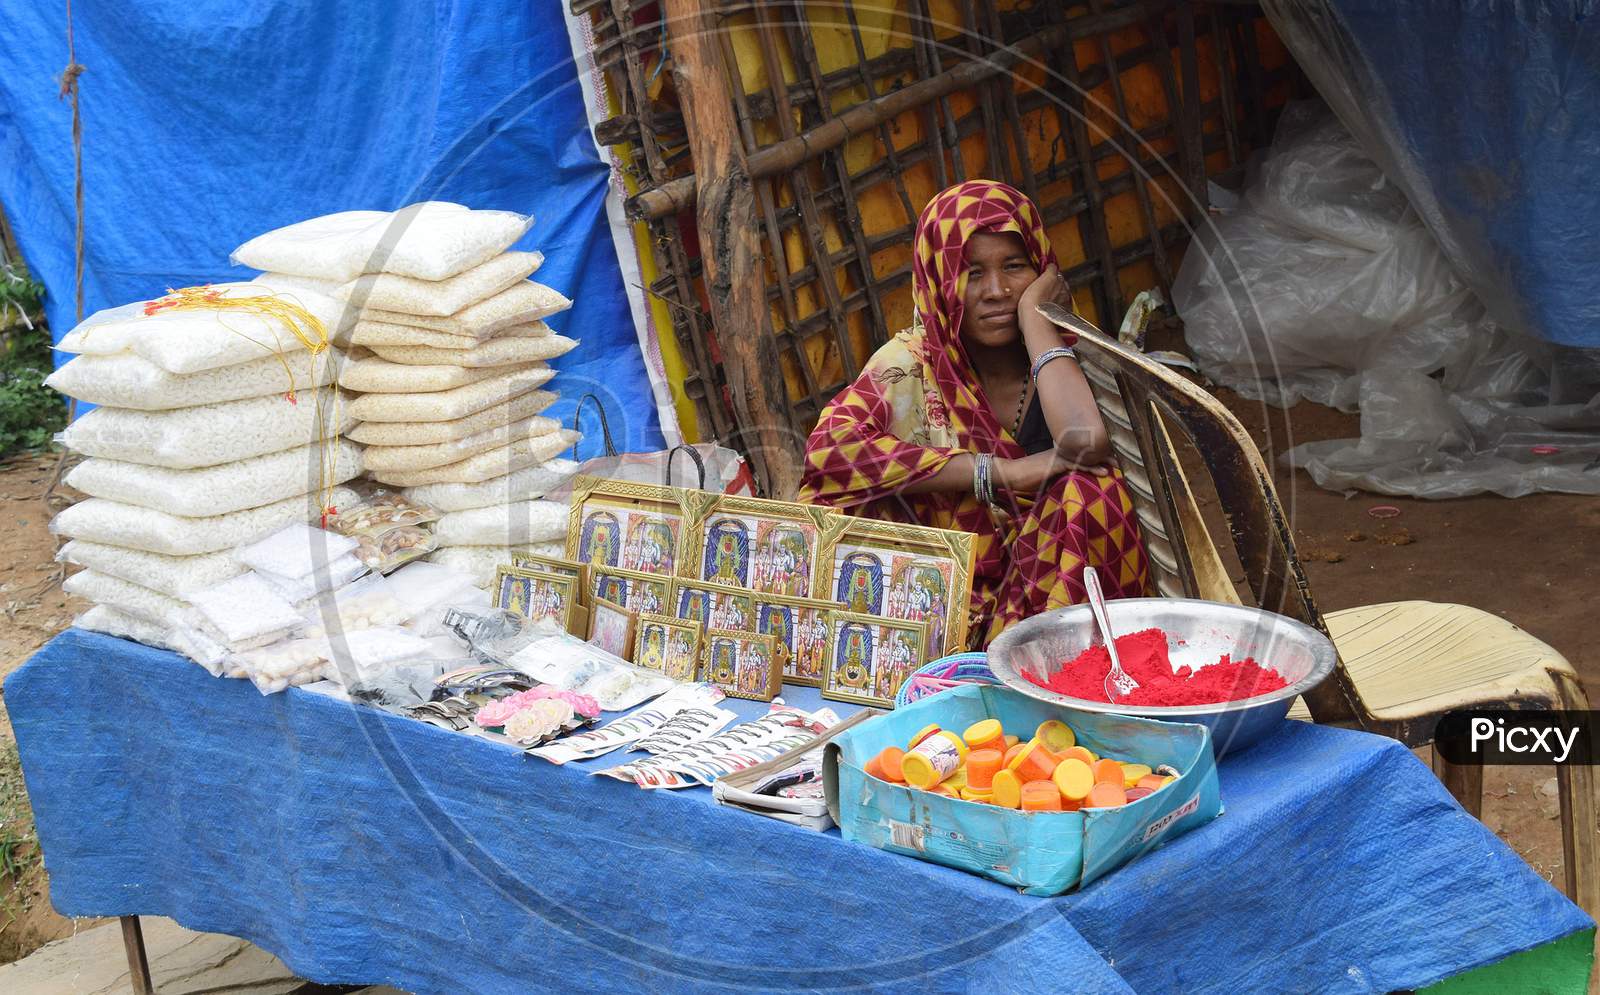 Street vendor selling market